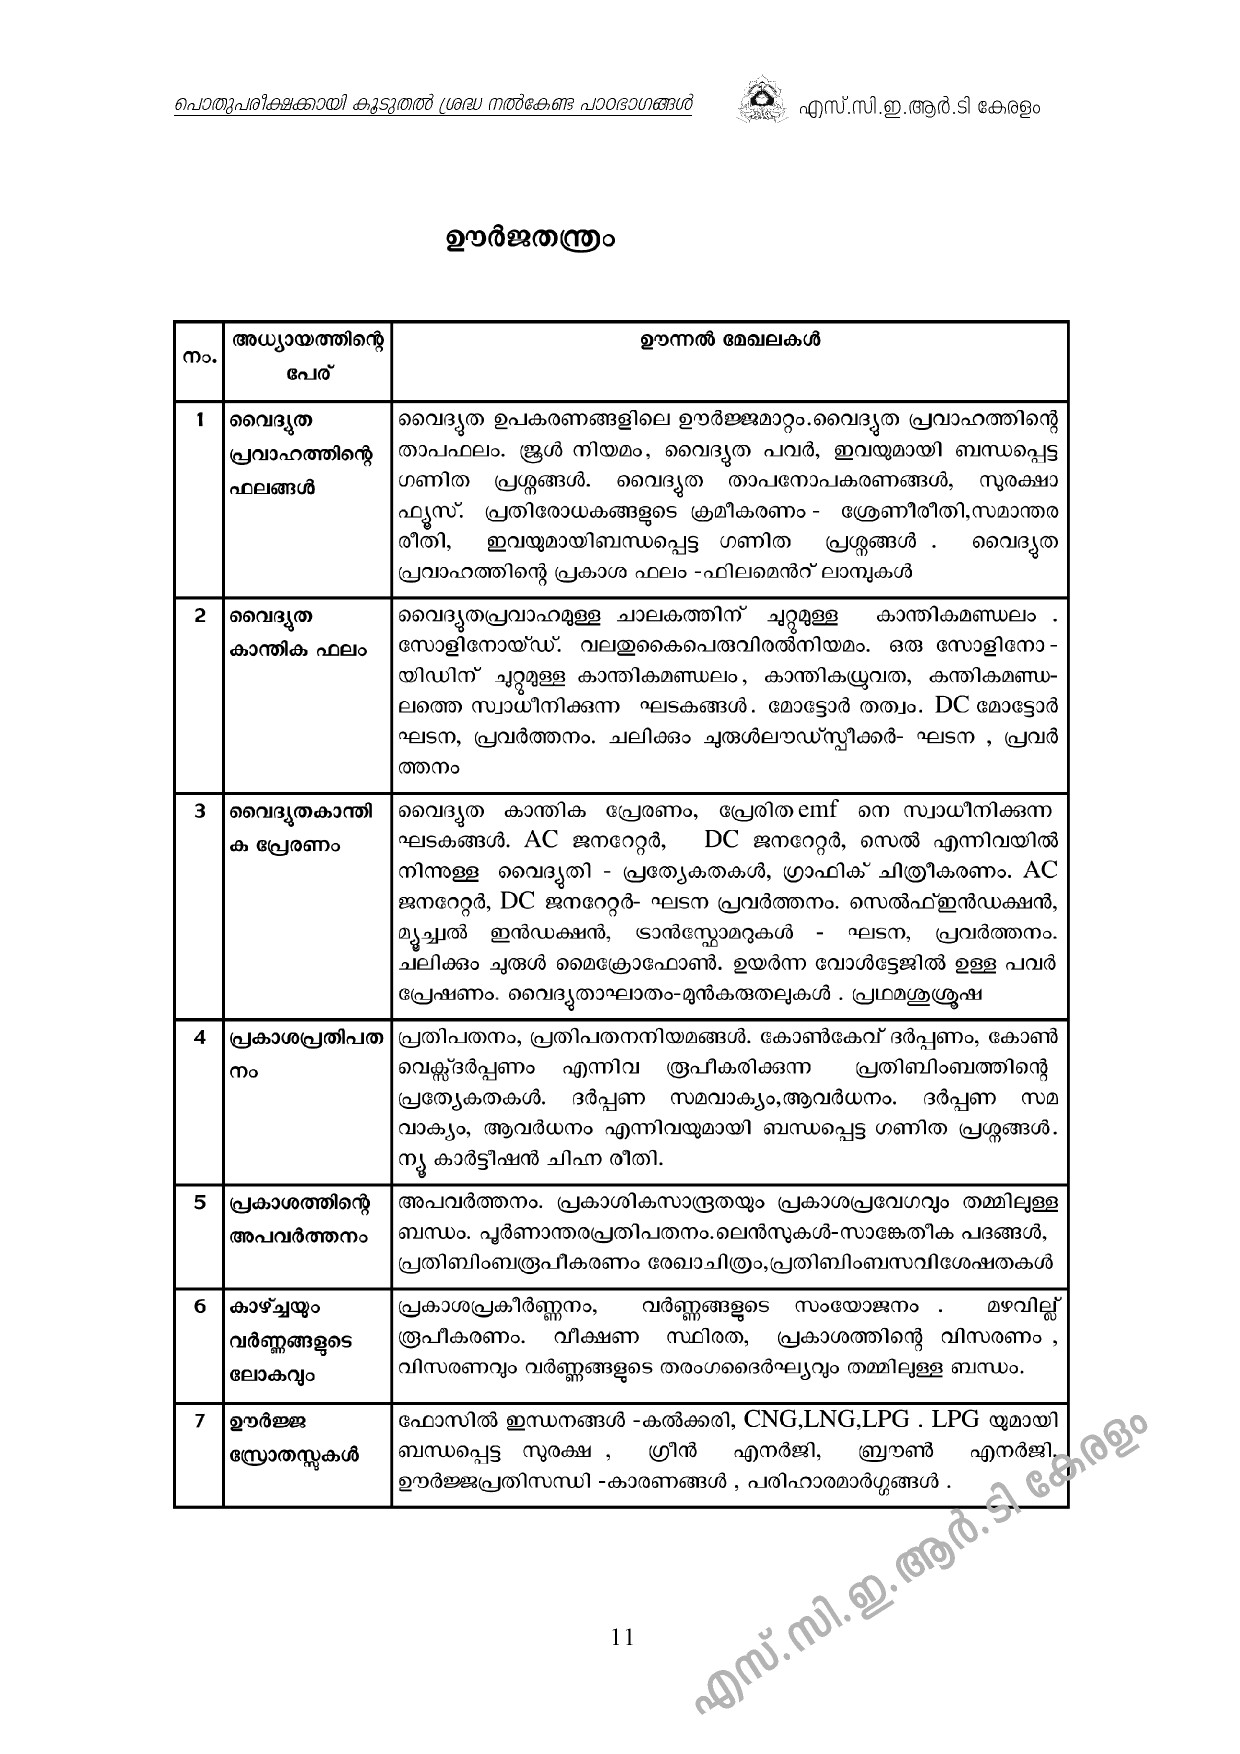 Kerala SSLC 2021 Focus Area - Notification Image 11